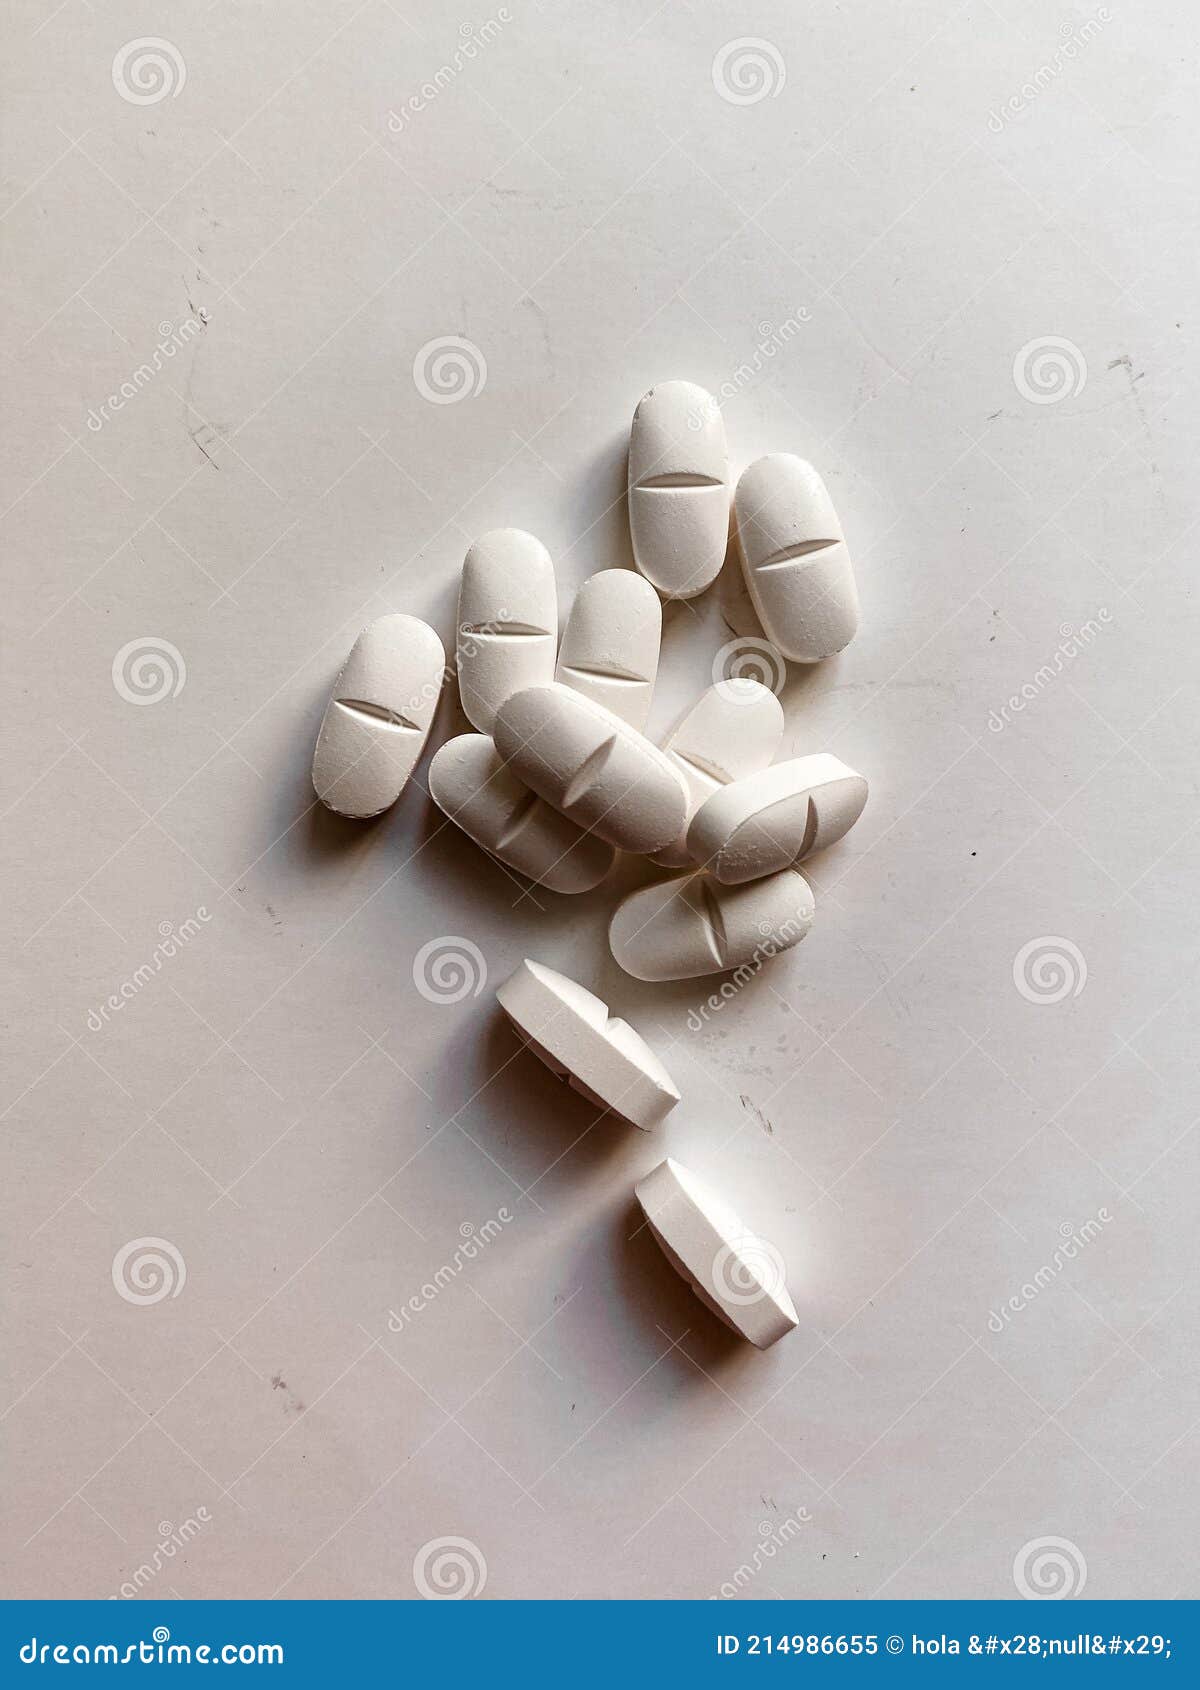 white tablets pastillas blancas